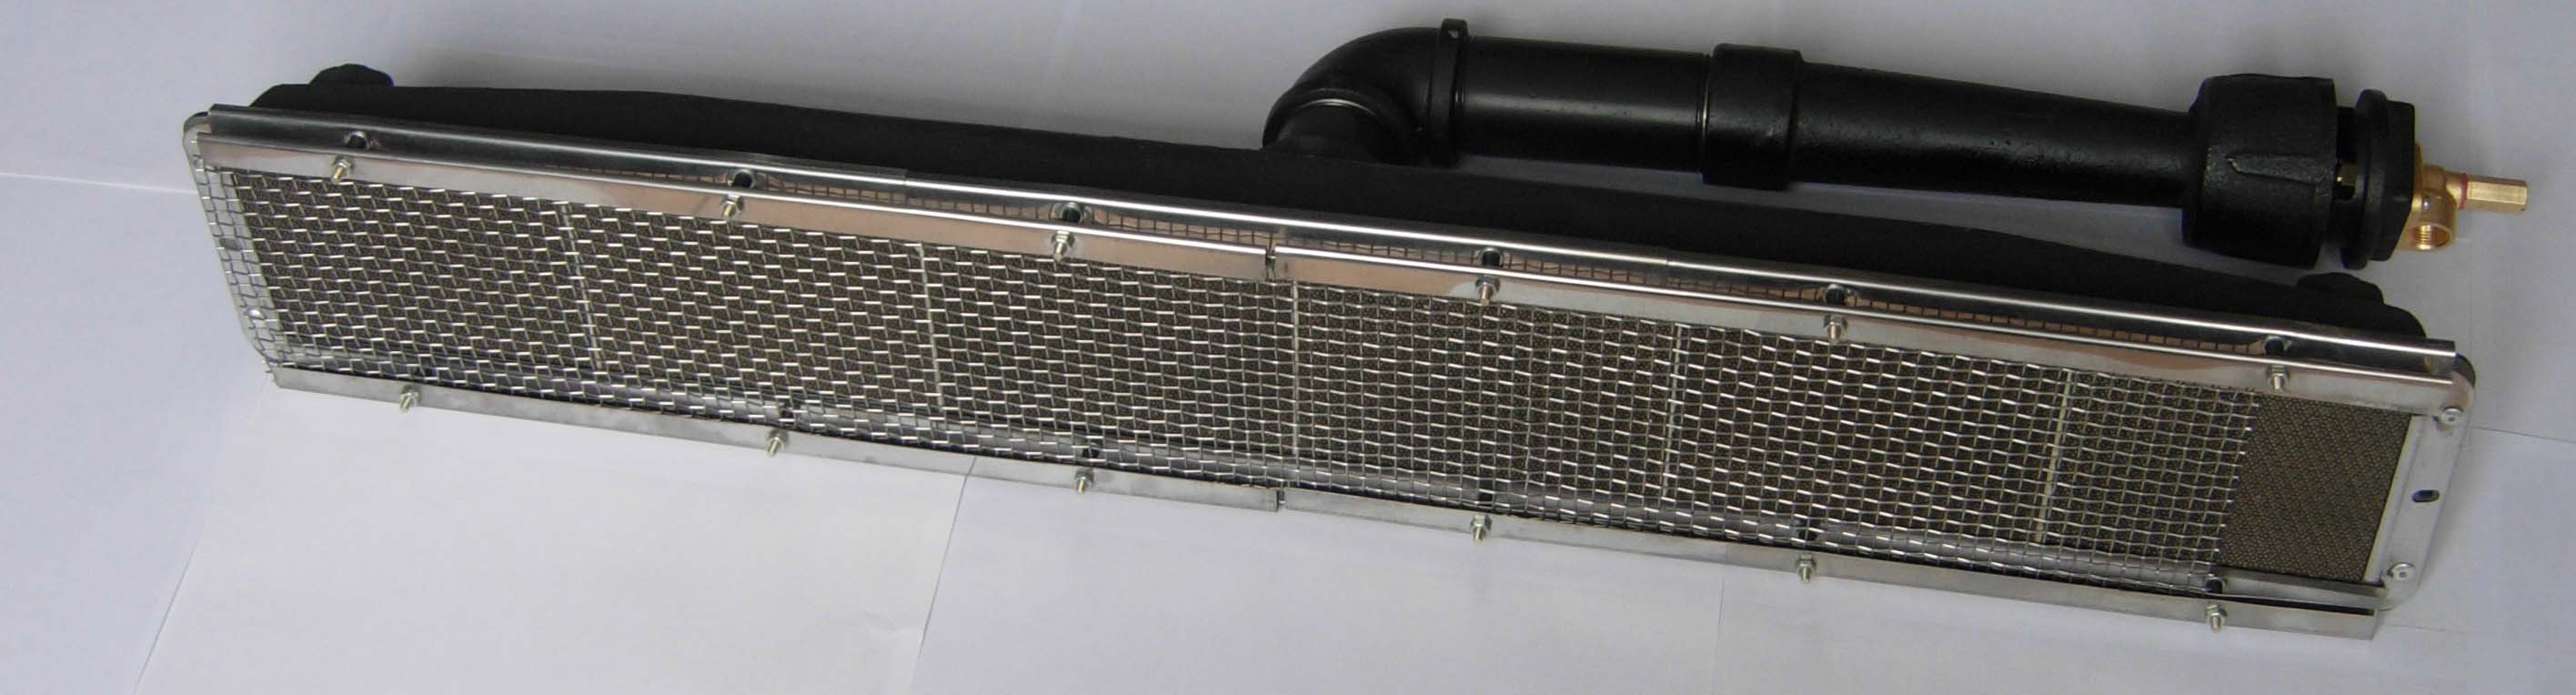 Infrared Industrial preheating Burner,preheating heater